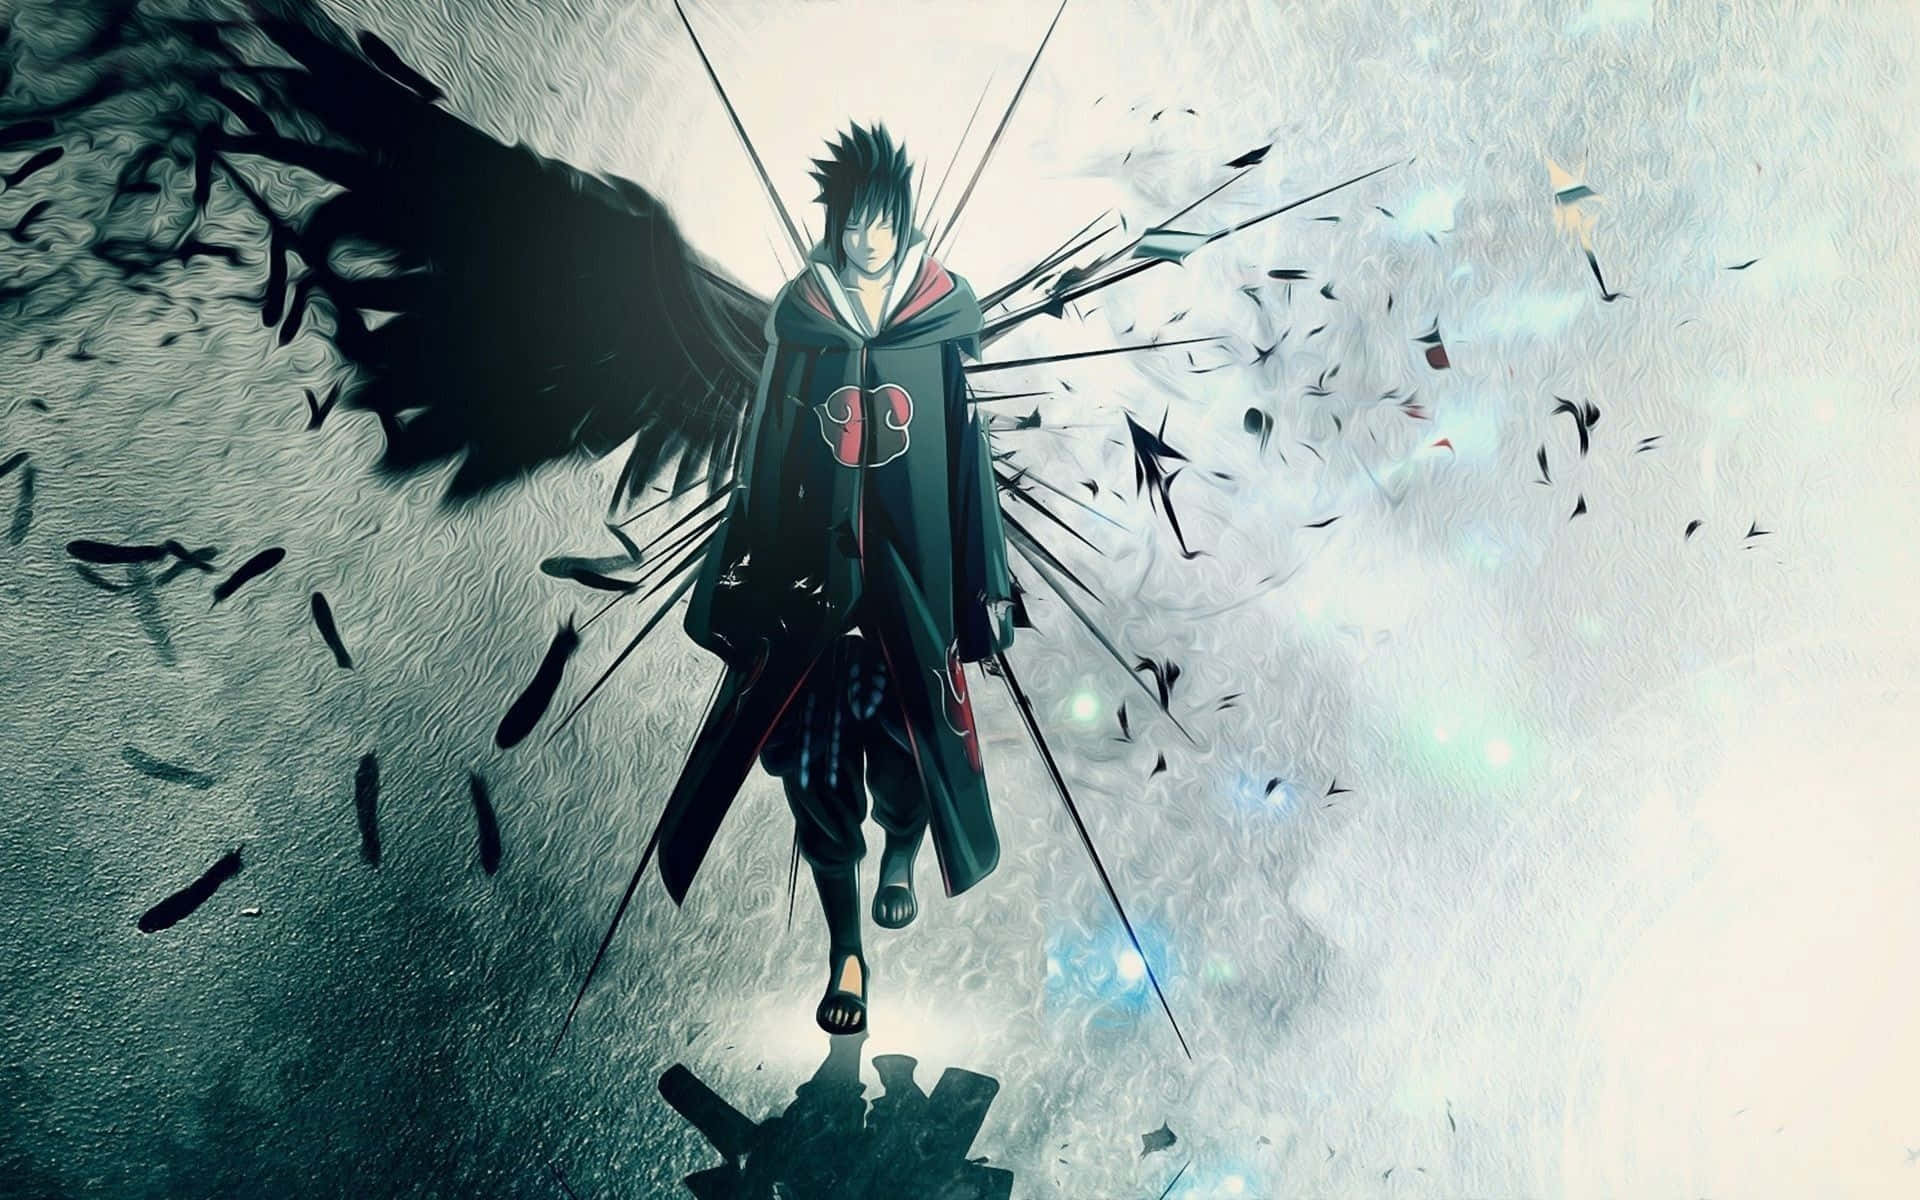 Download Sick Anime Naruto Sasuke Black Angel Wings Wallpaper | Wallpapers .com